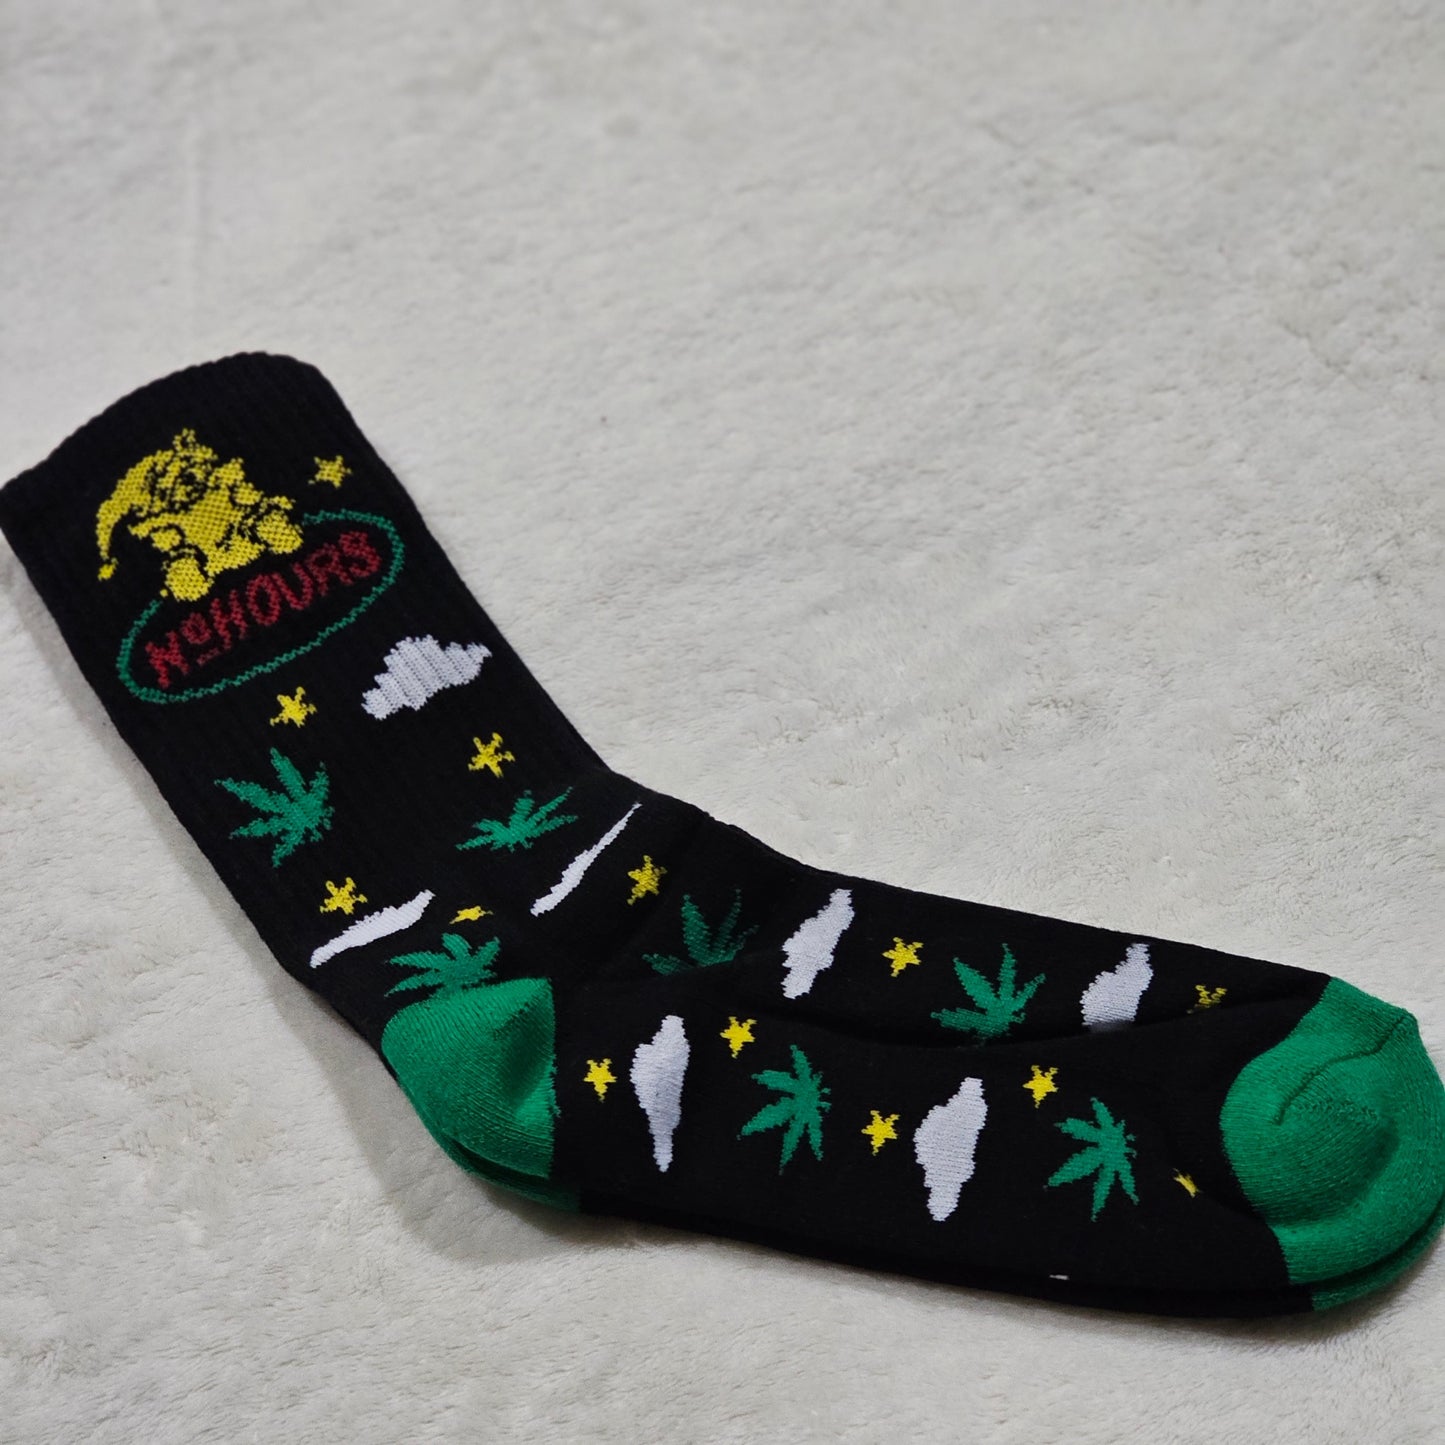 Dream Crew Socks | Black & Green Weed Leaf Graphics - No Hours - Socks